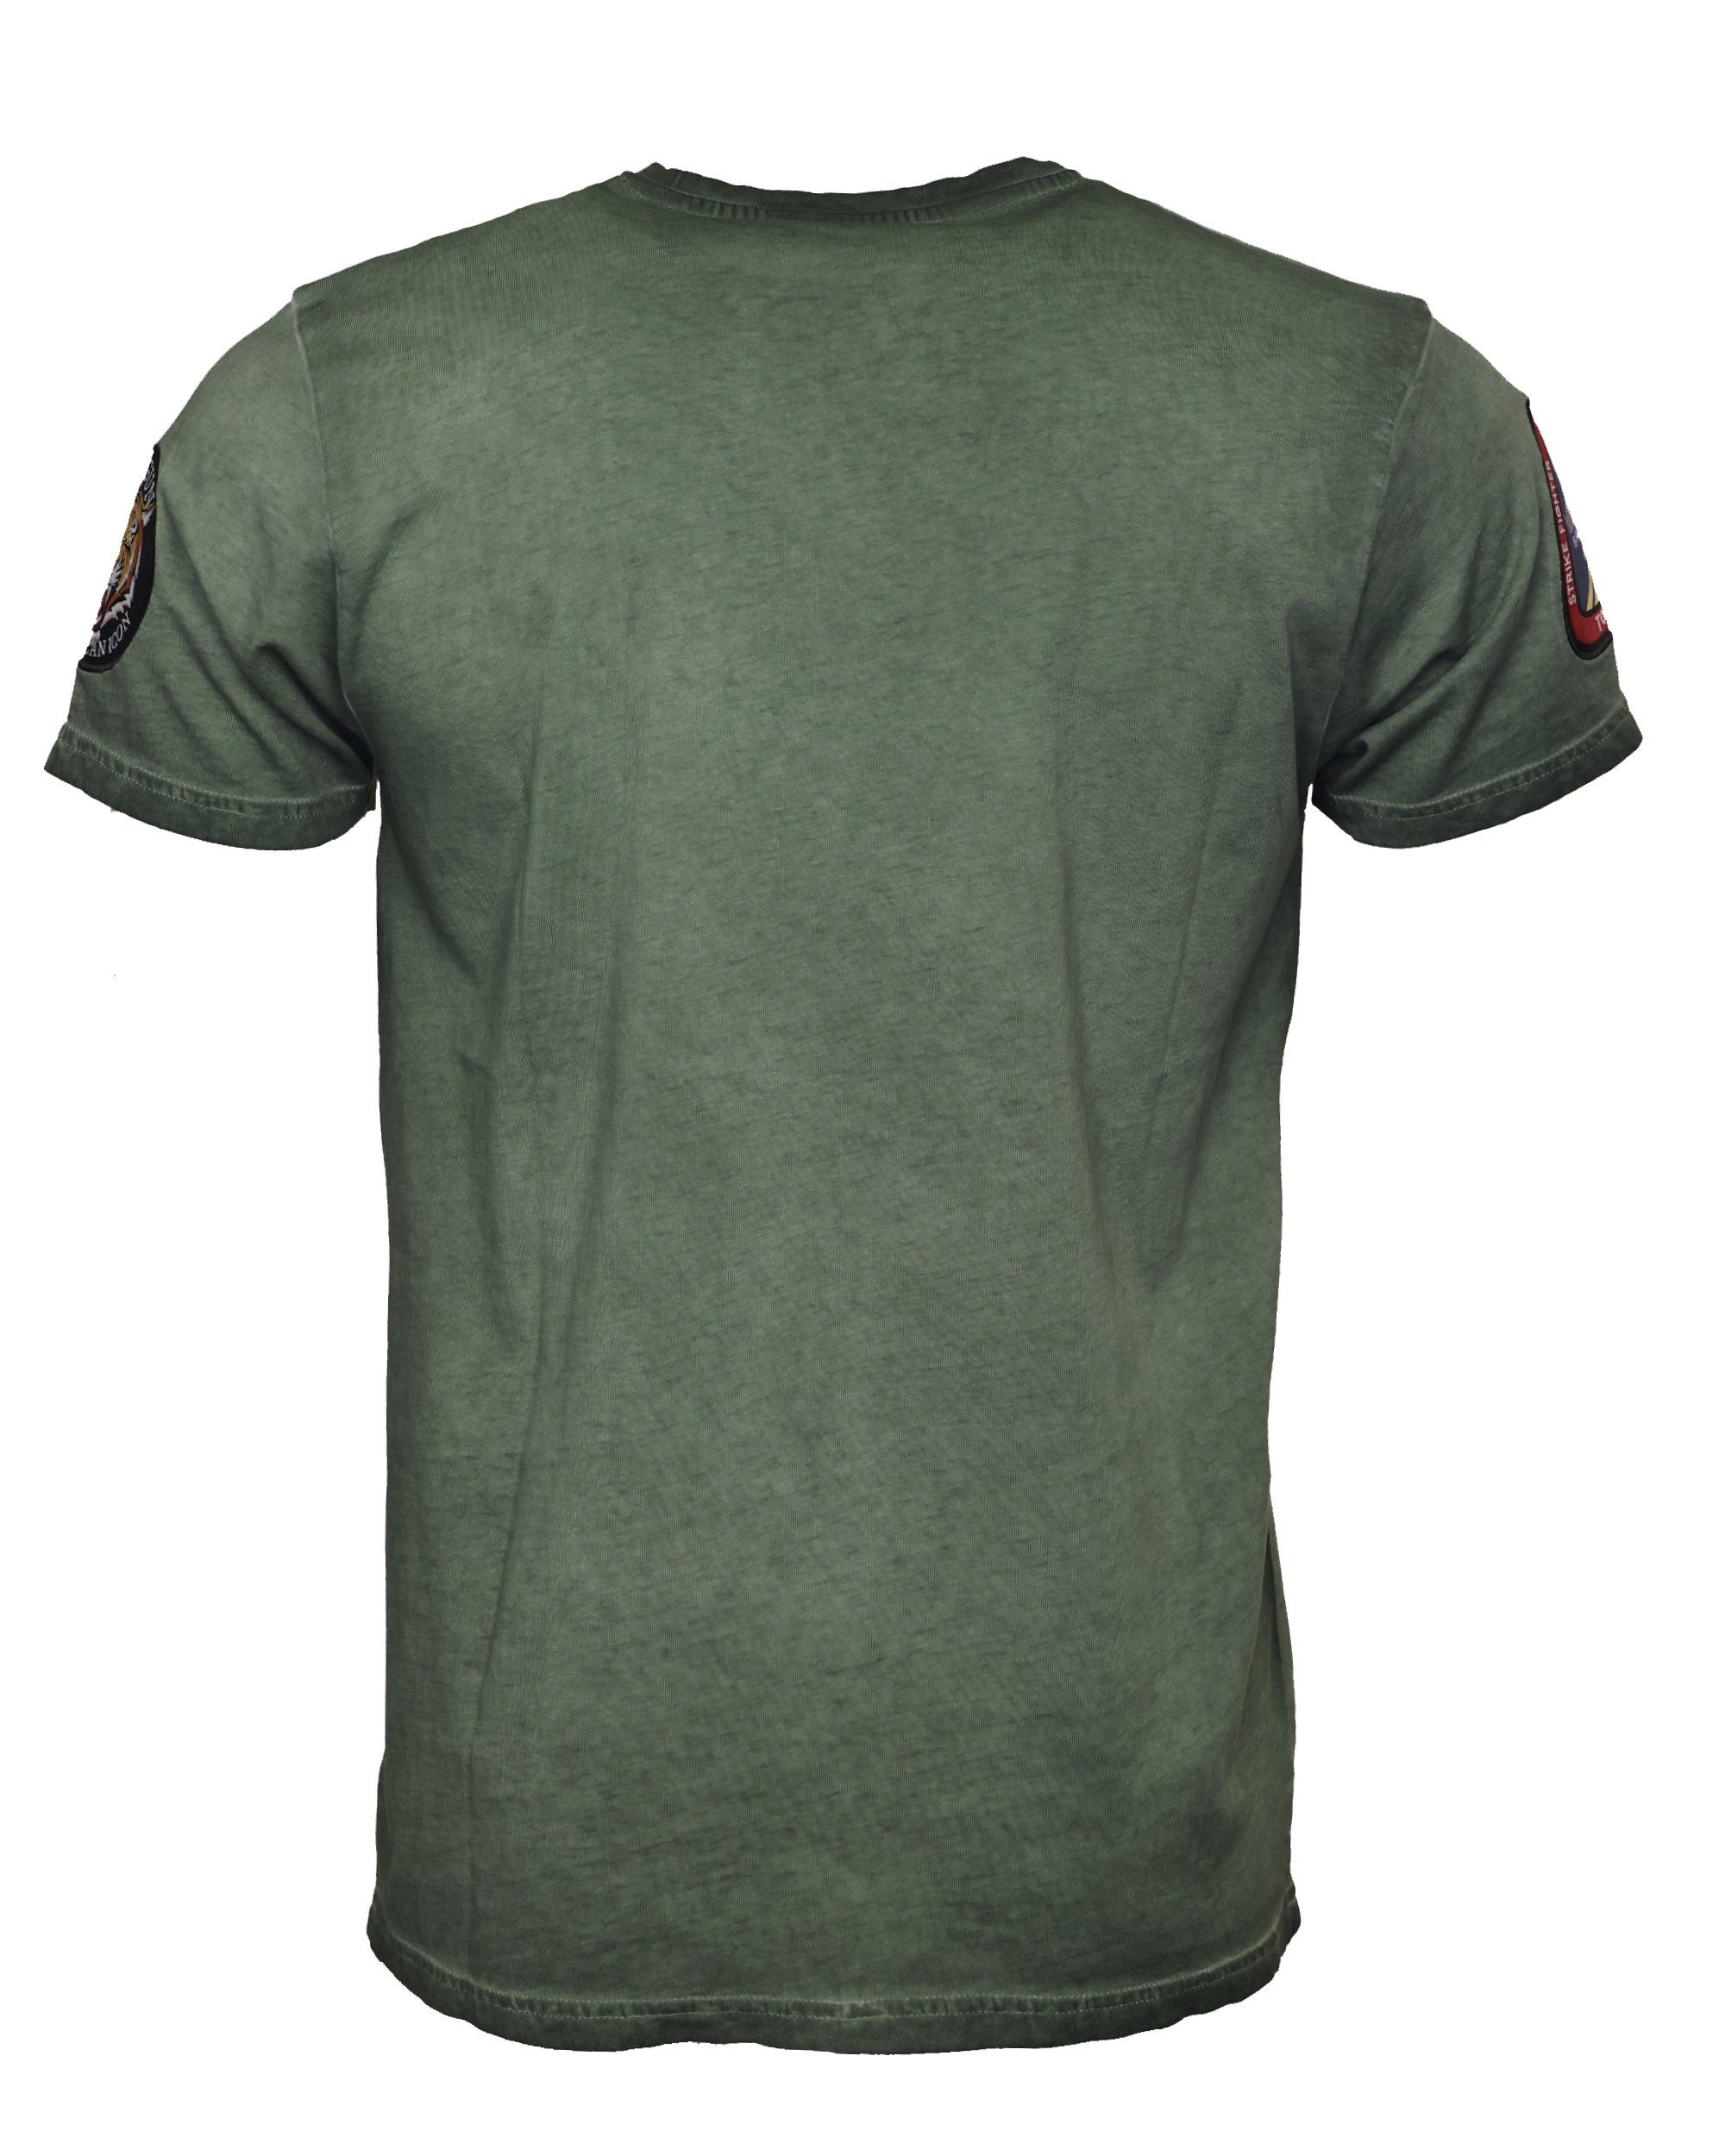 TG20213001 olive TOP T-Shirt GUN